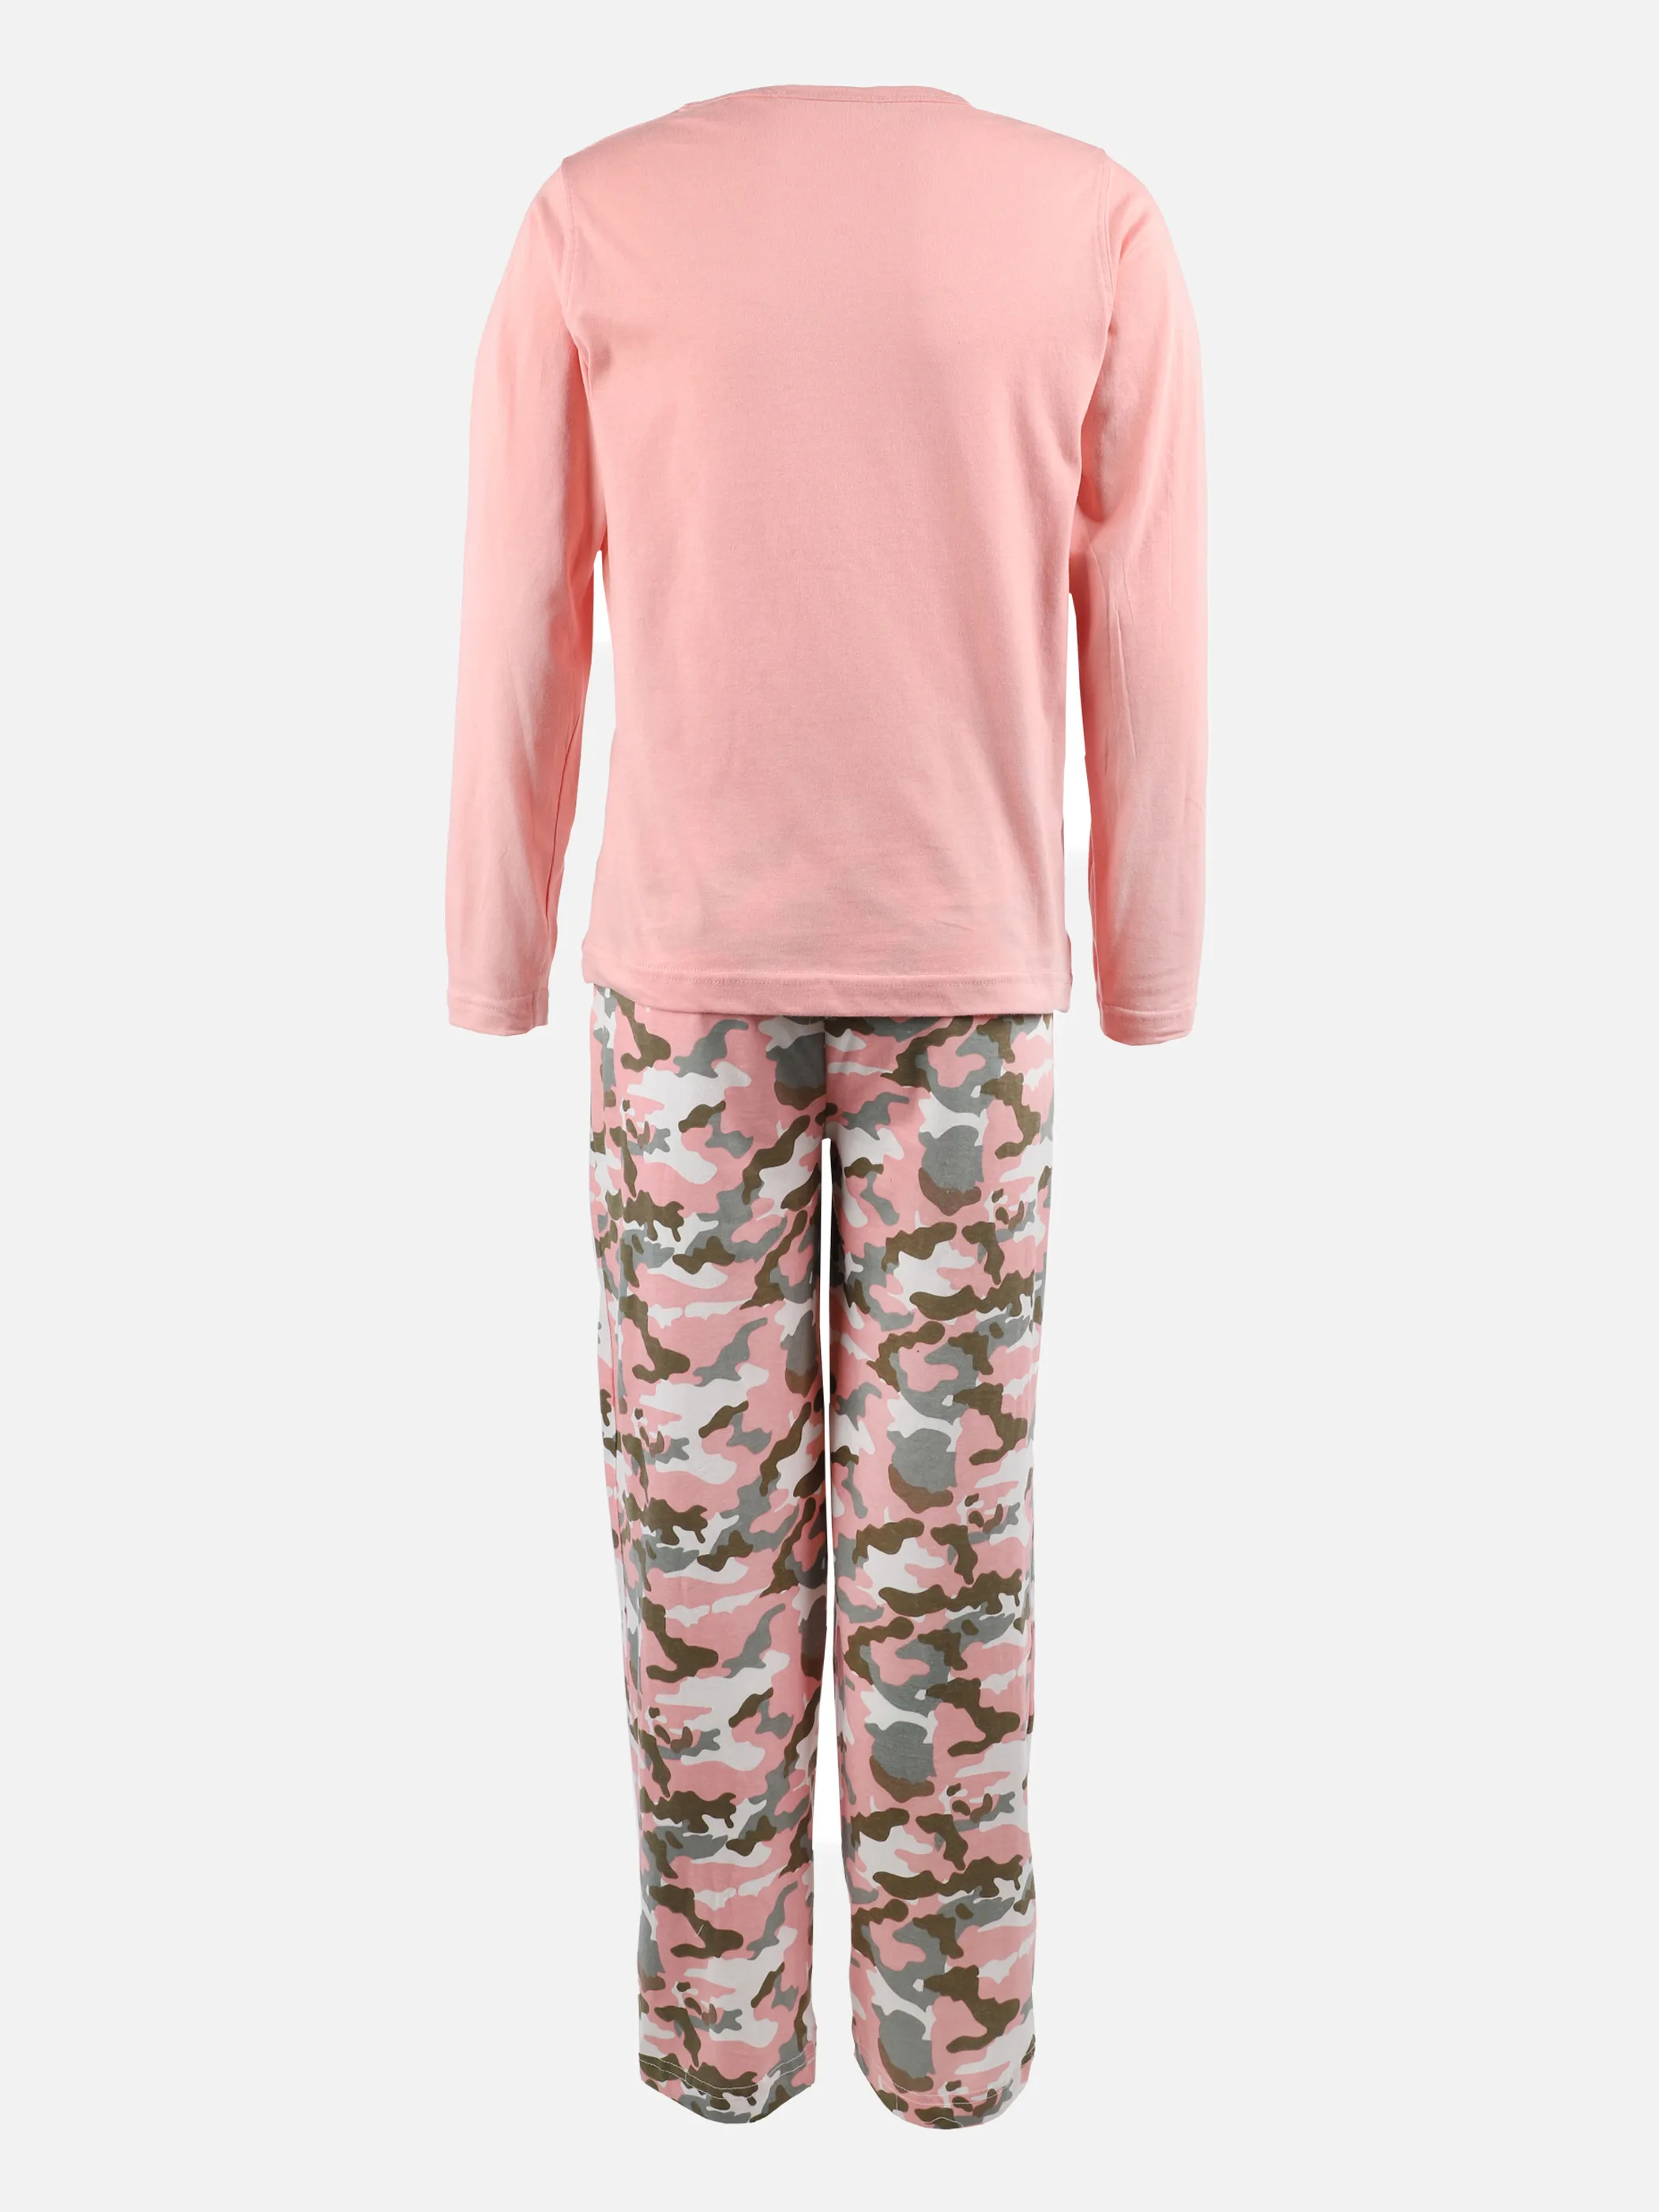 Stop + Go TG Pyjama lang camoflage mit P Rosa 870278 ROSE/GREEN 2